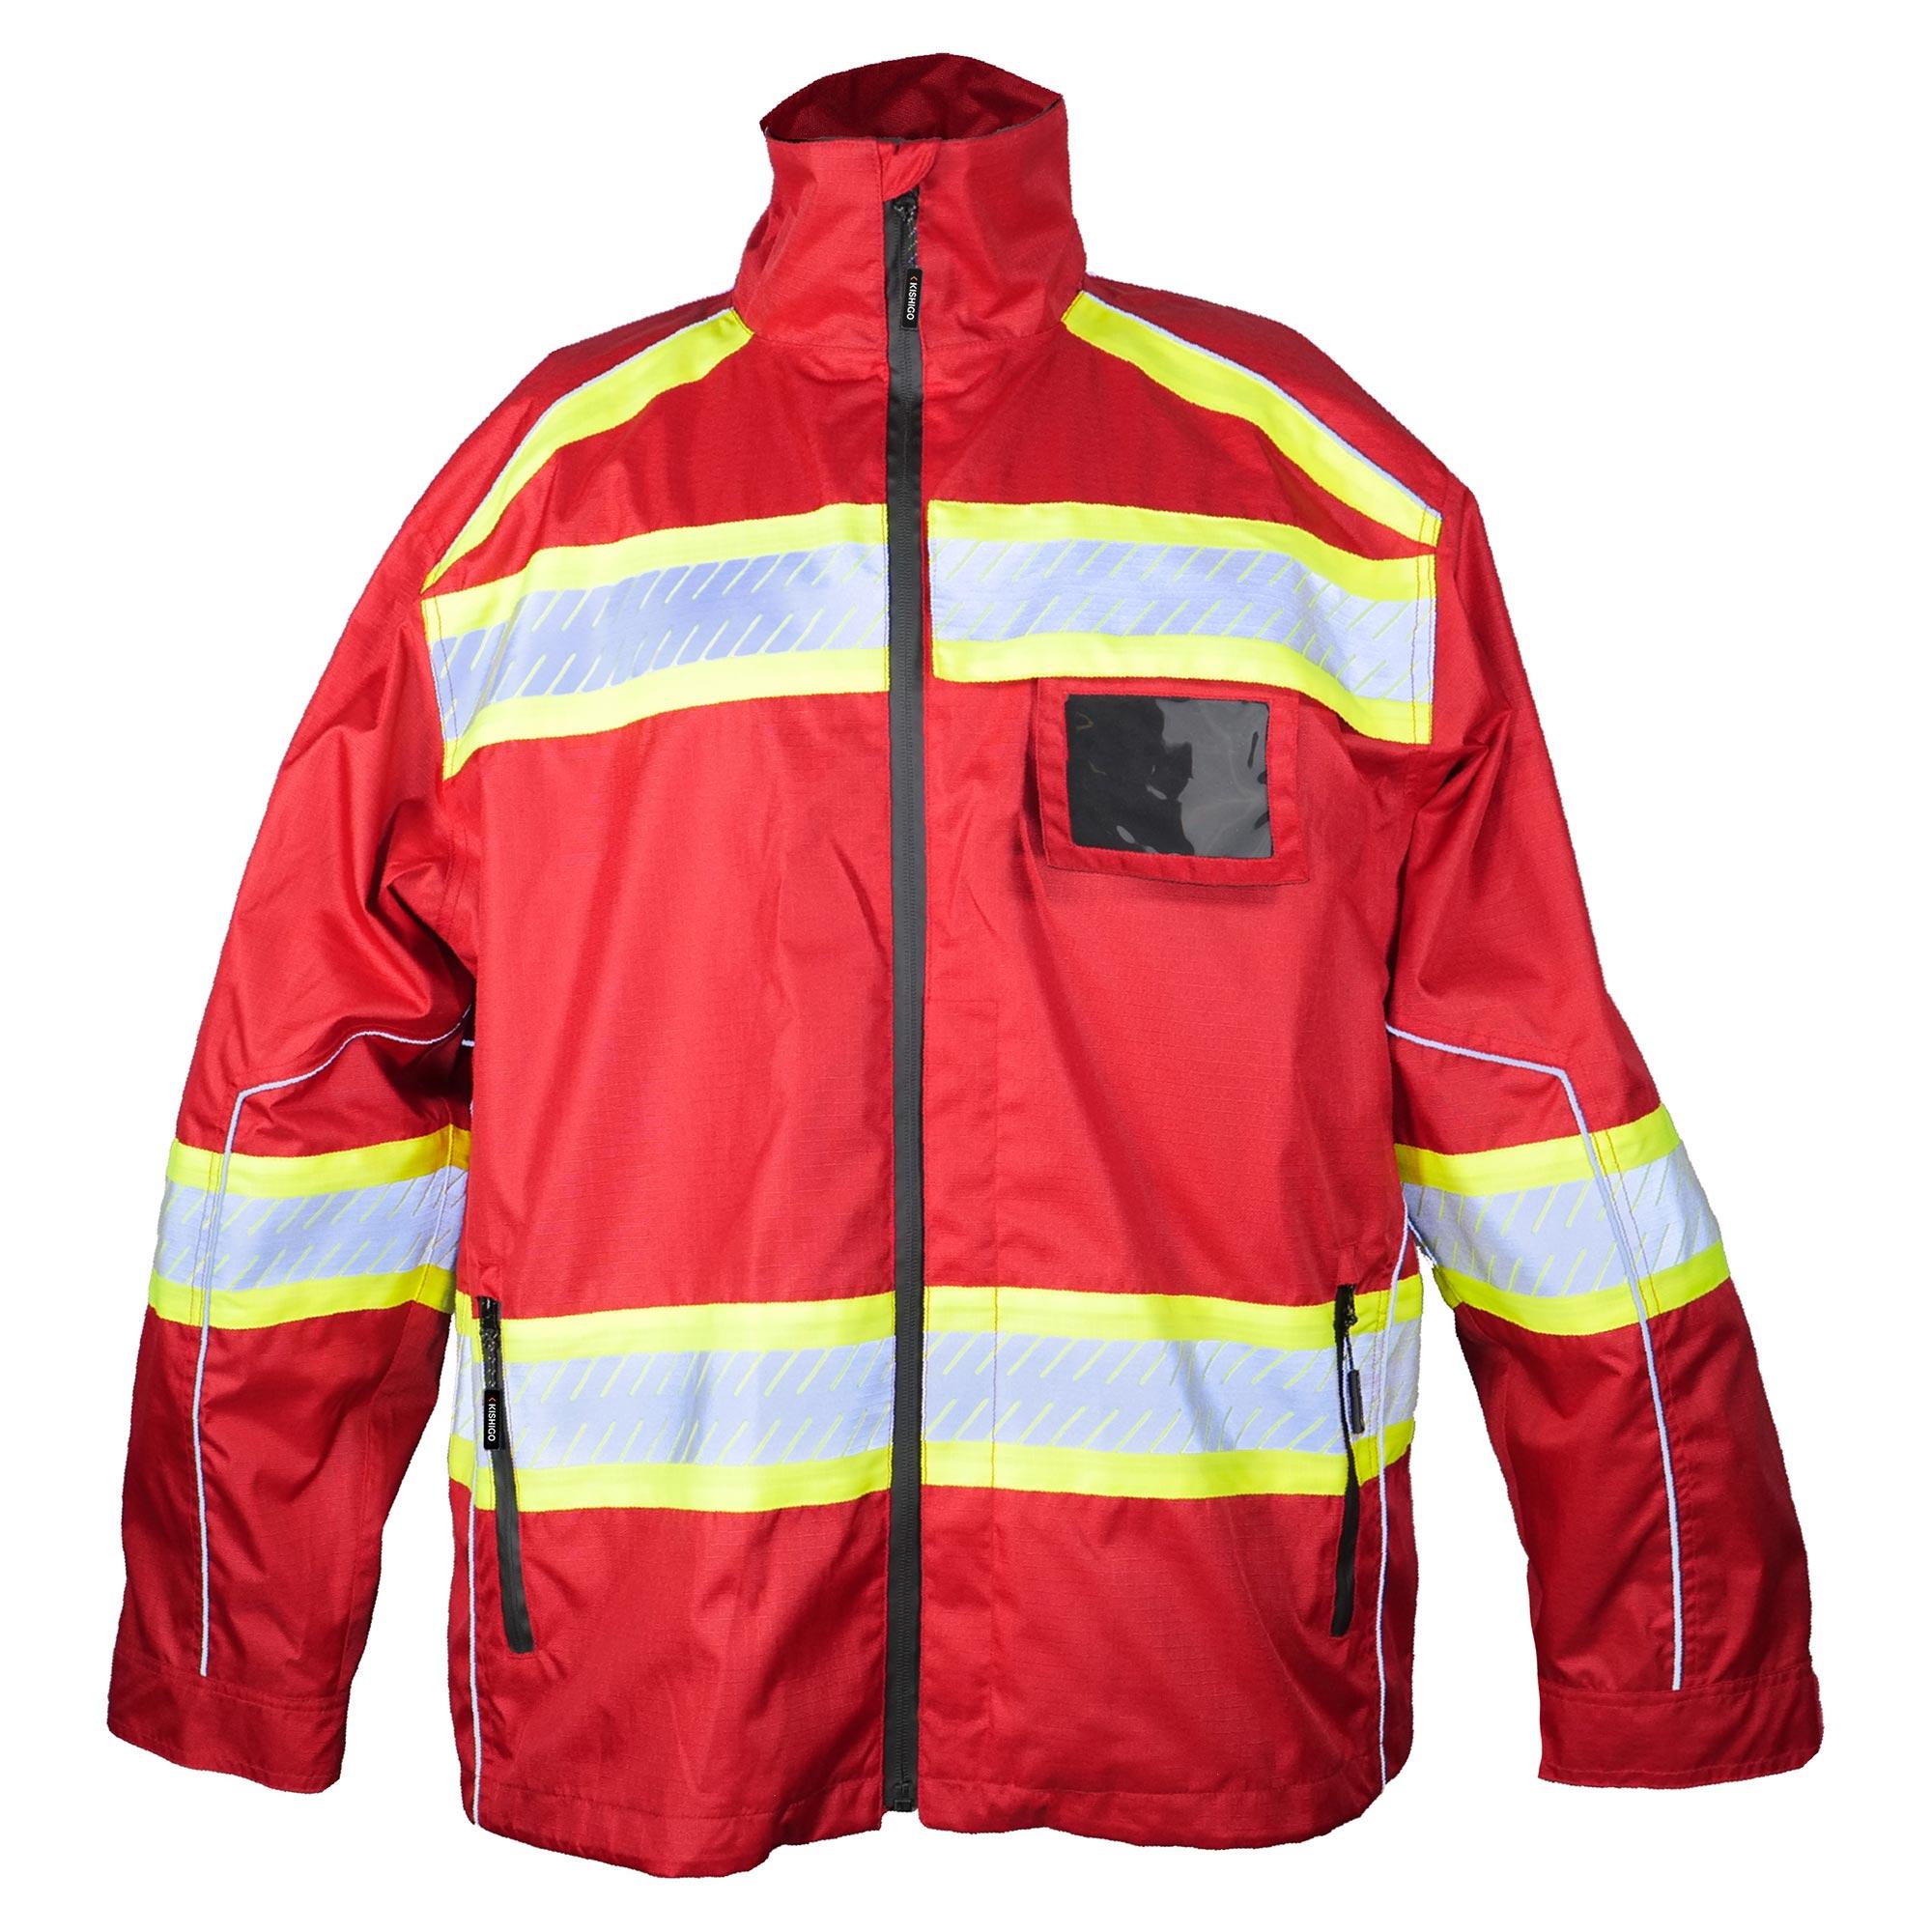 Kishigo B303 Enhanced Visibility Premium Jacket - Red | Full Source